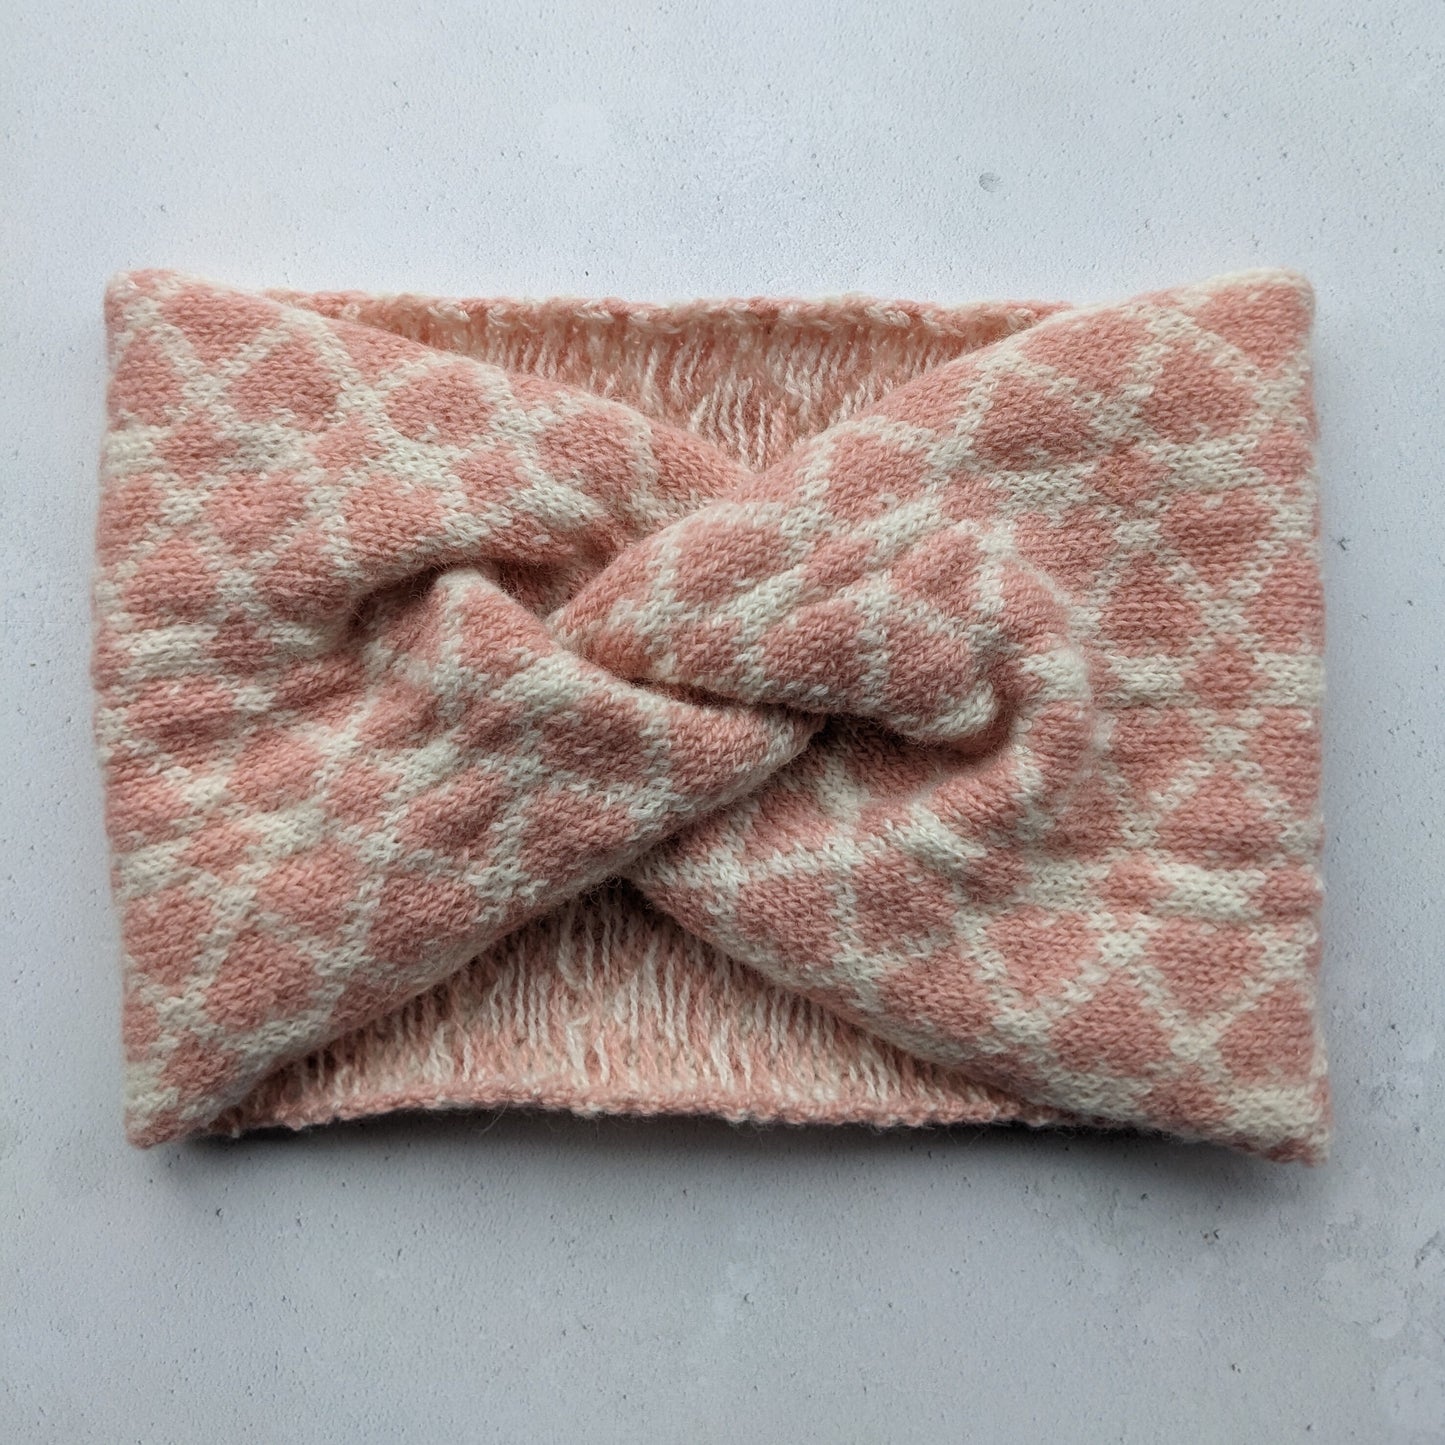 Merino wool ear warmer knitted headband ecru with pale pink hearts